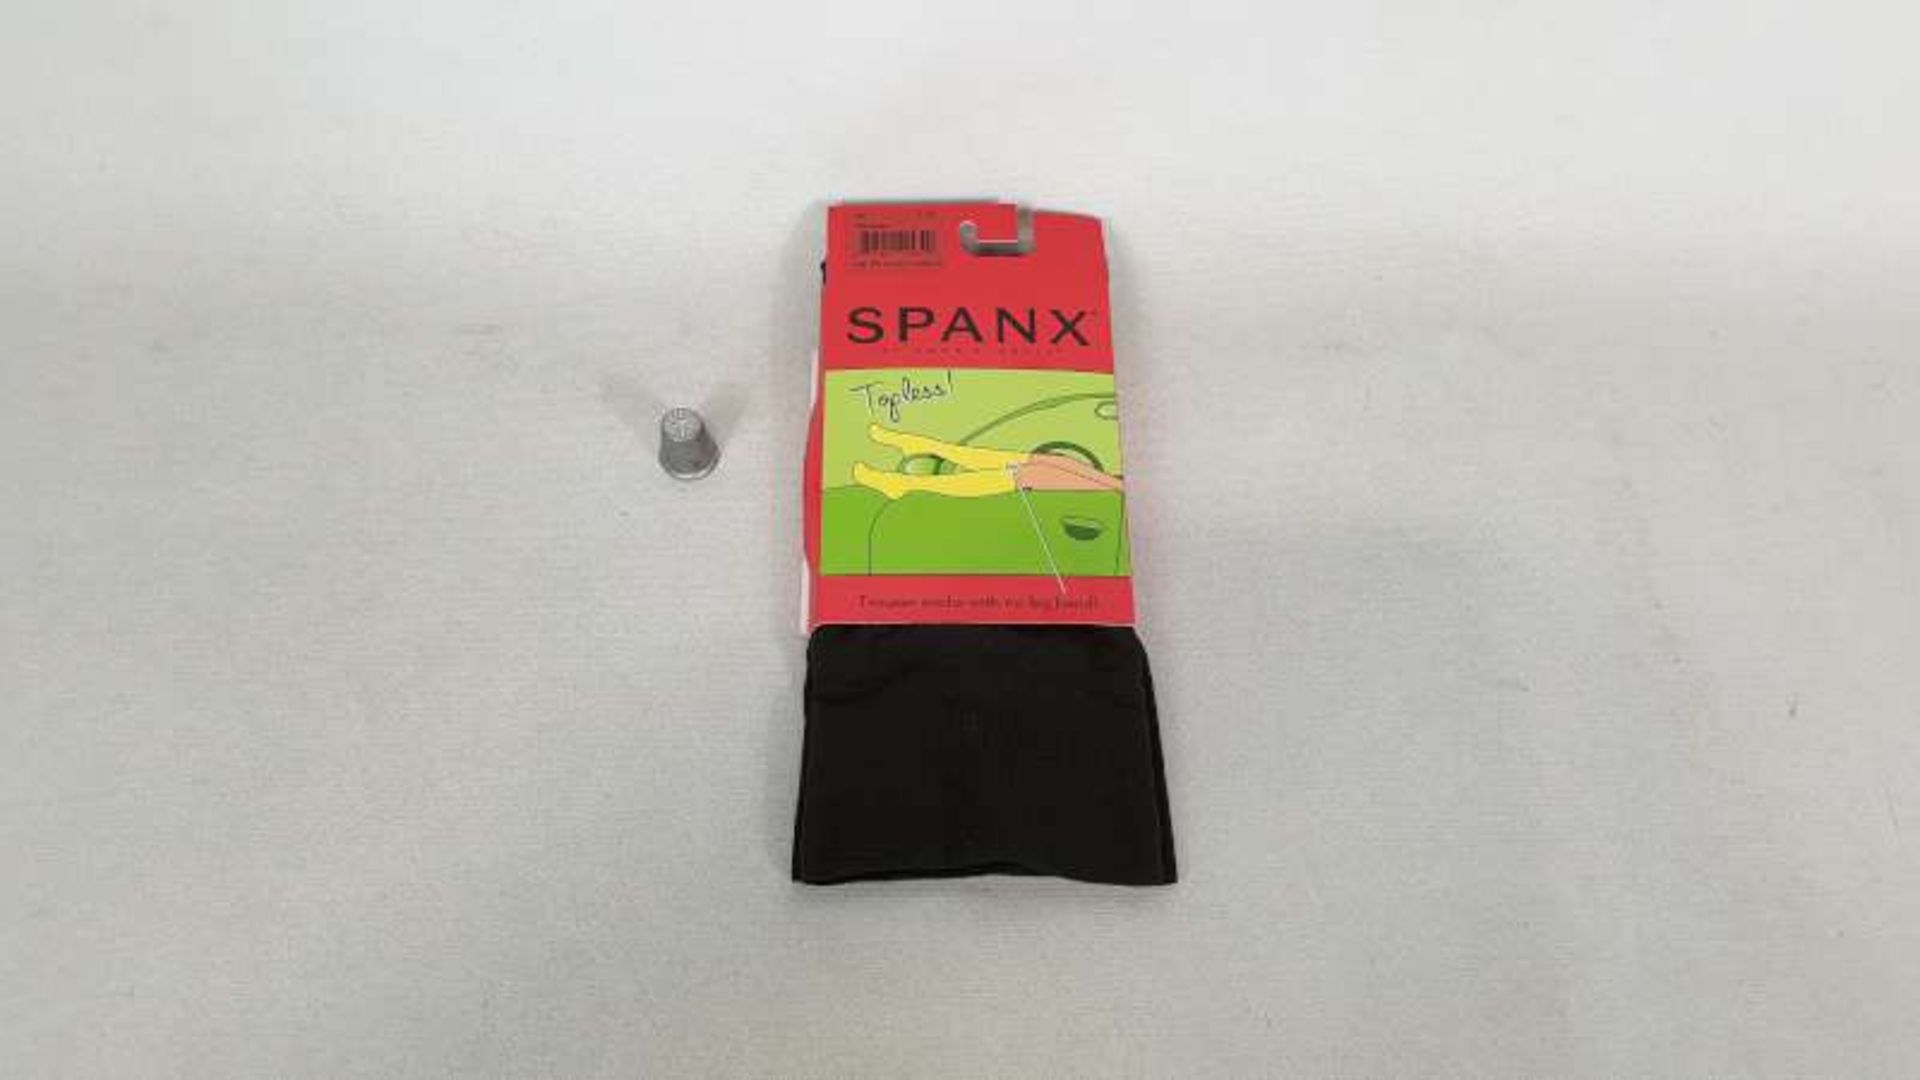 30 X BRAND NEW PAIRS OF SPANX REGULAR SIZE BITTERSWEET TROUSER SOCKS RRP £450 - Image 2 of 2